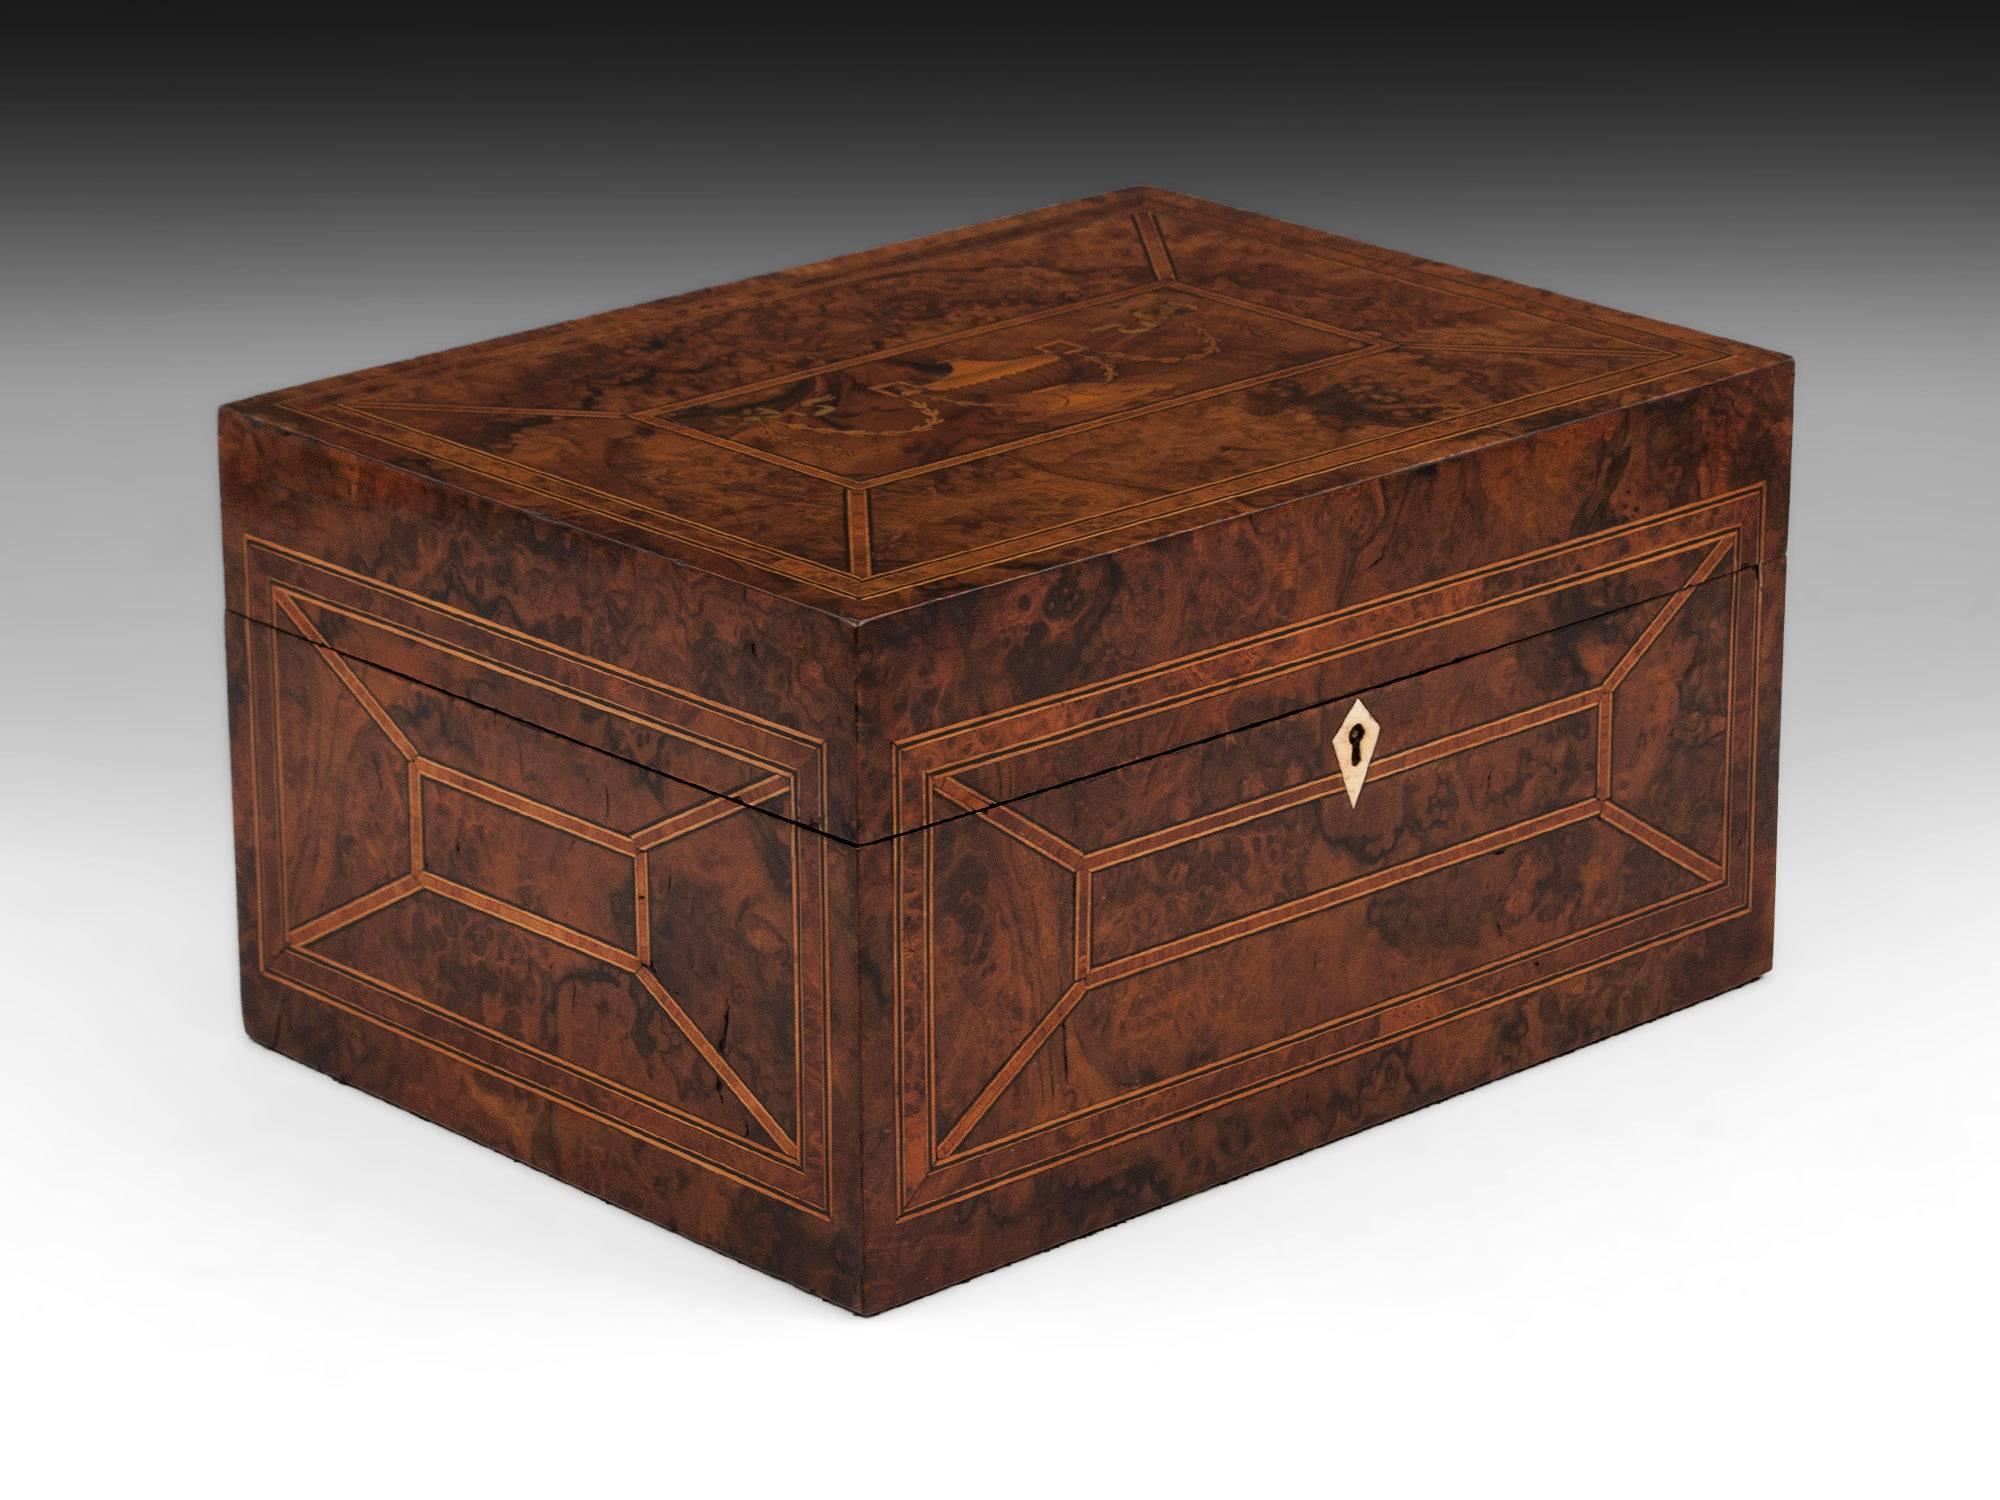 British Antique Burr Walnut Inlaid Urn Jewelry Box, Early 20th Century